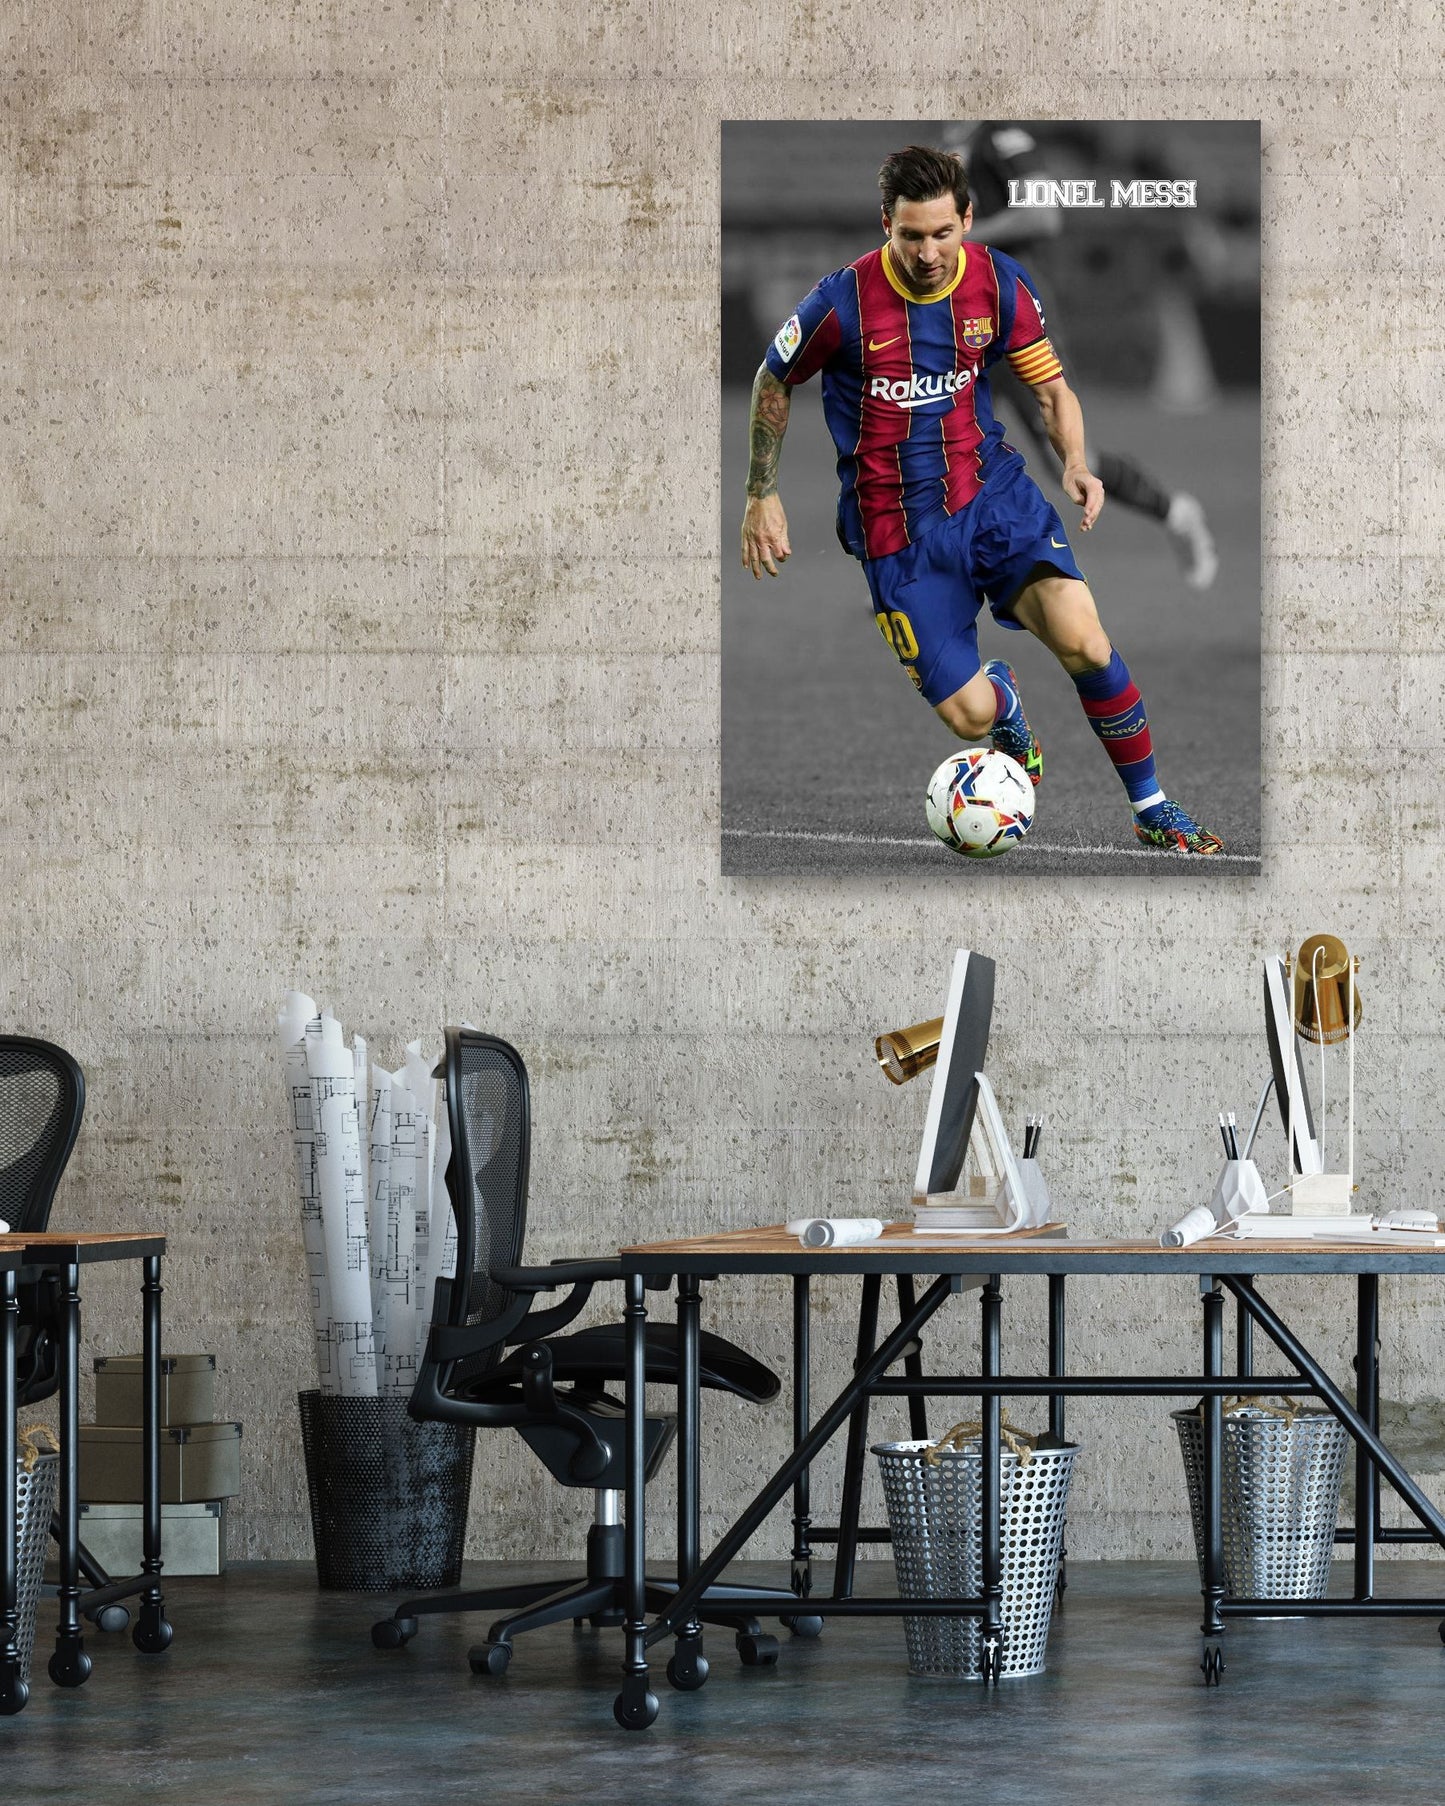 Lionel Messi - @JeffNugroho